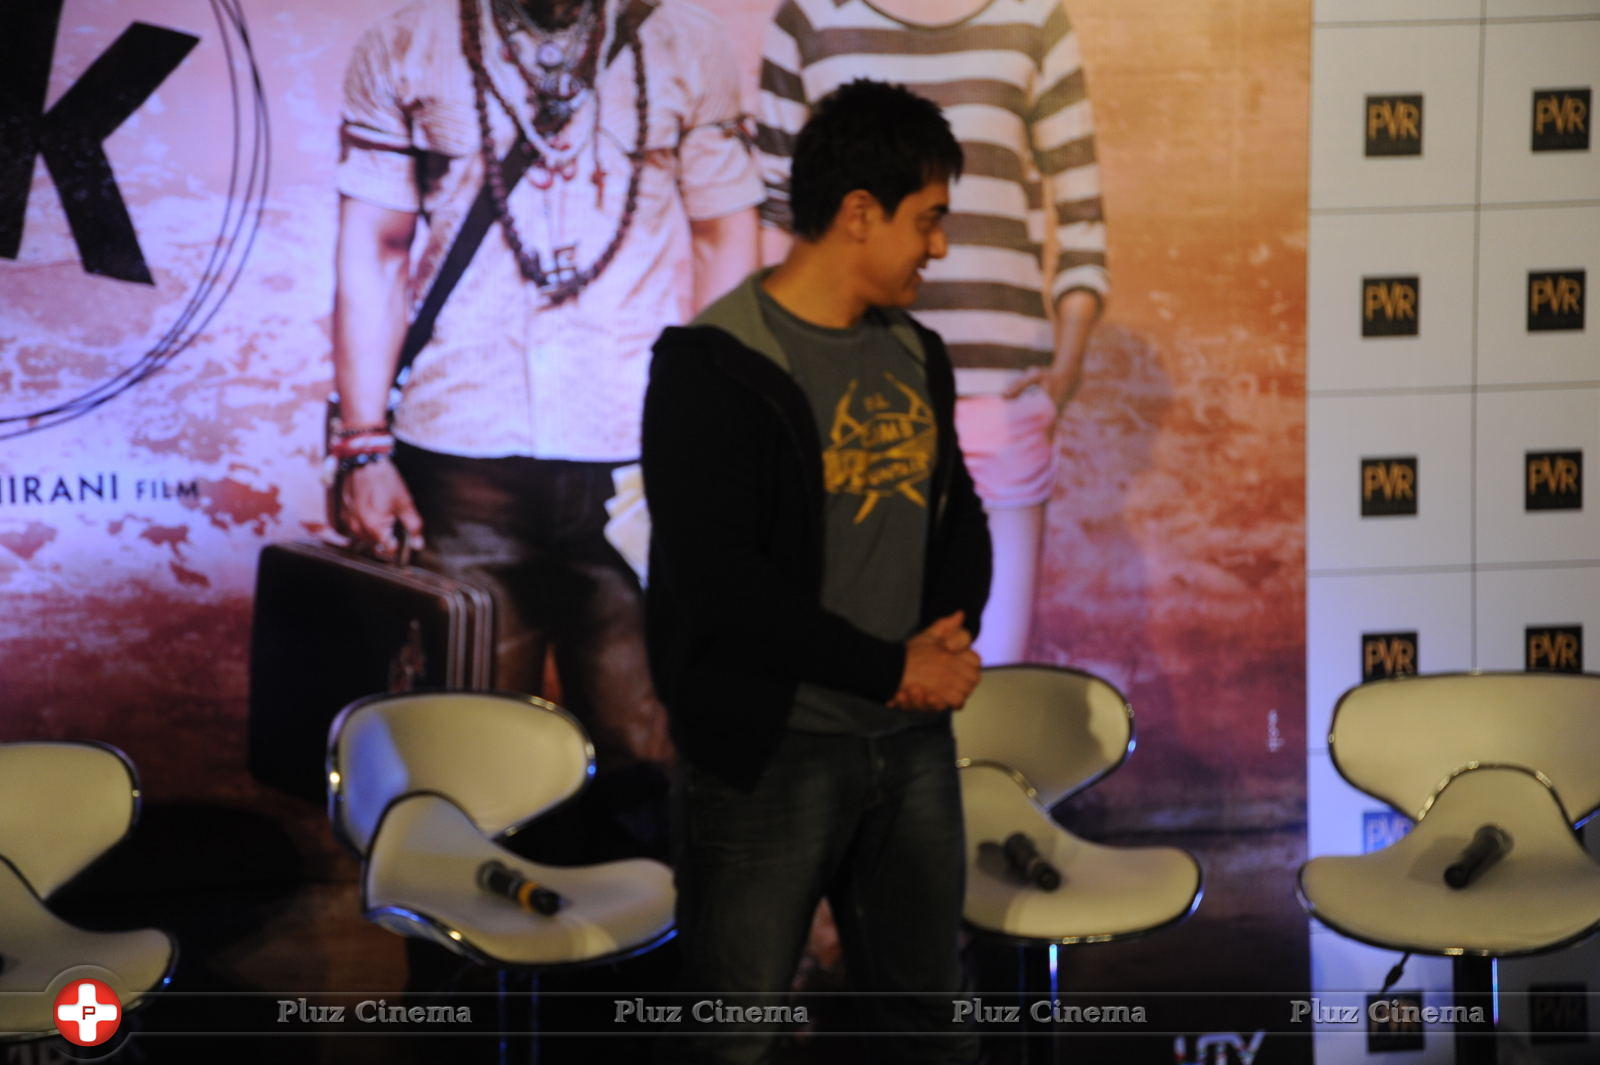 Aamir Khan - Aamir Khan and Anushka Sharma promotes PK Movie at Hyderabad Photos | Picture 899918